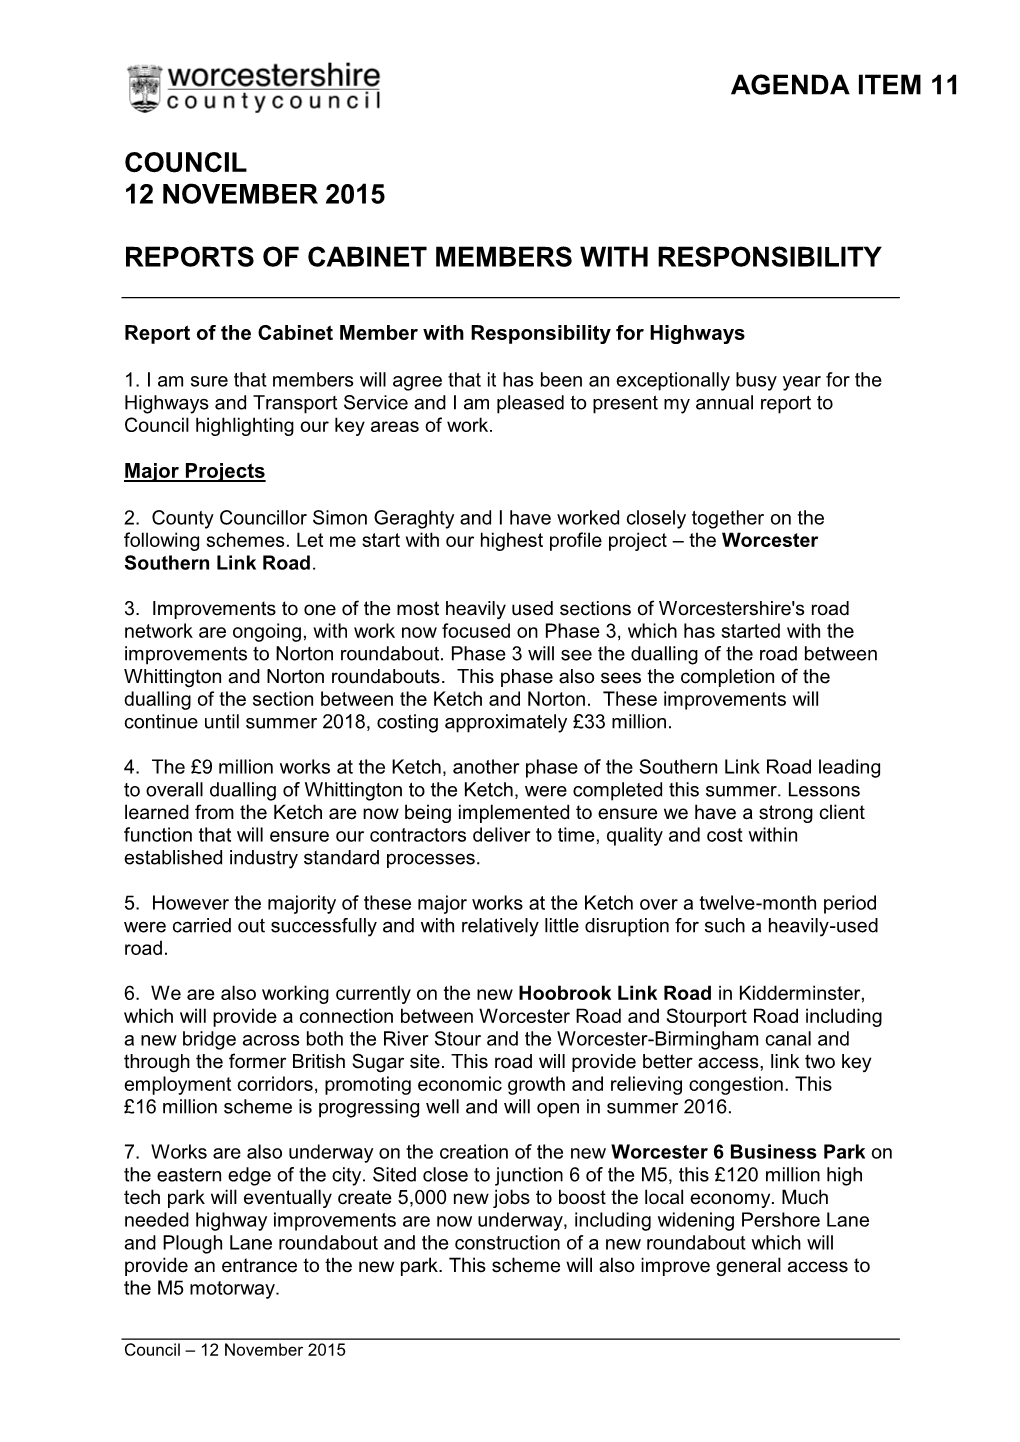 Agenda Item 11 Council 12 November 2015 Reports Of